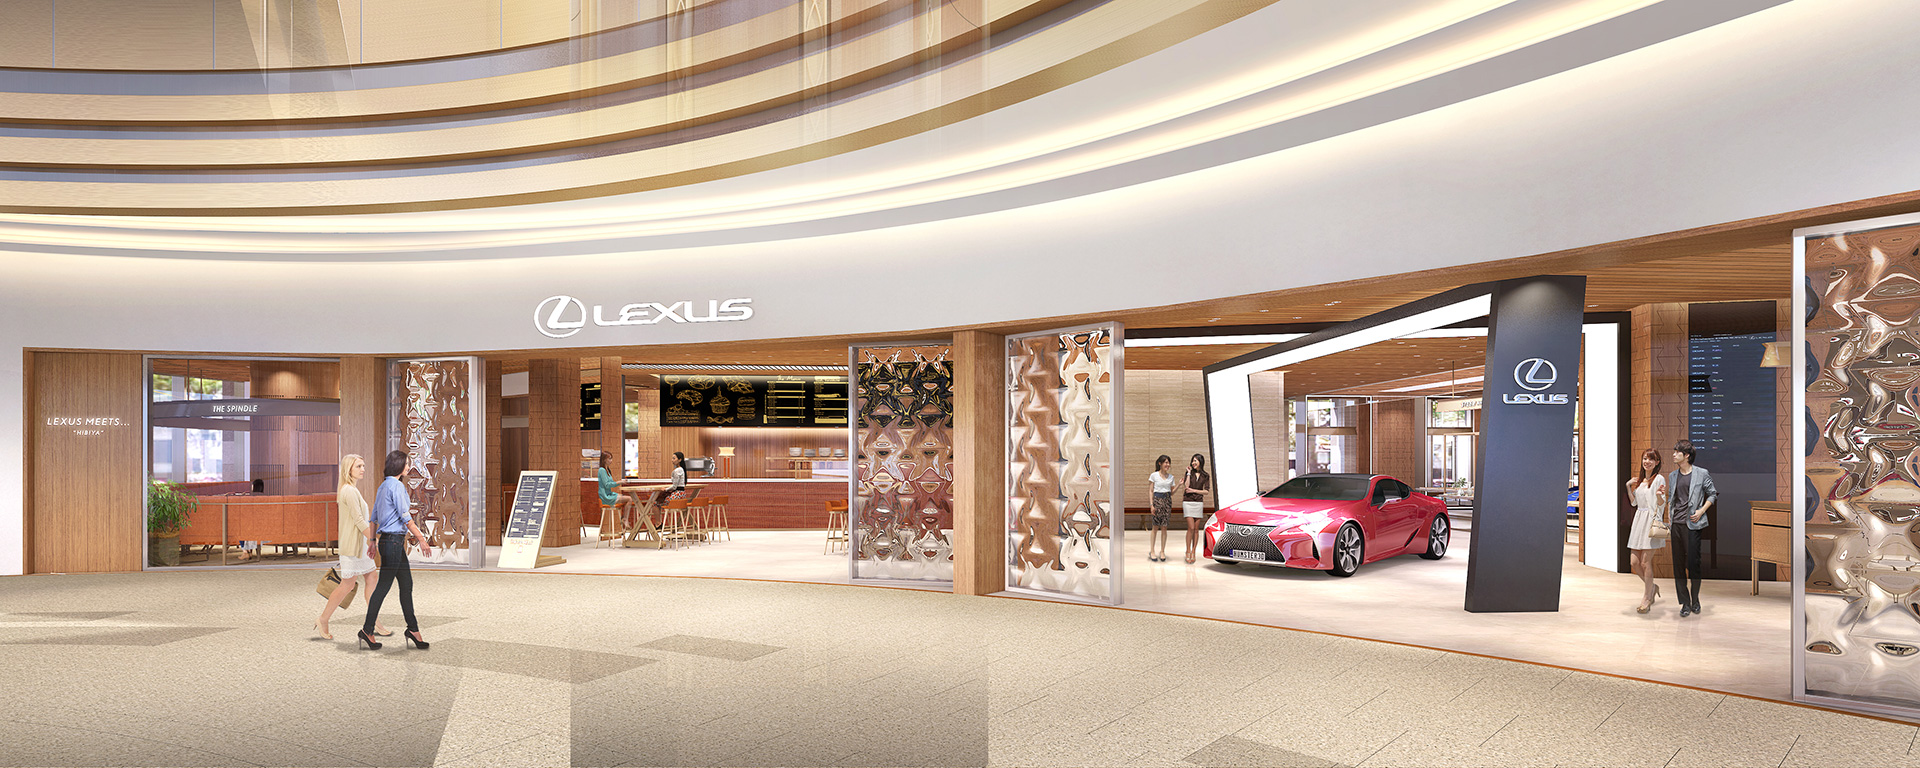 LEXUS、ブランド体験型施設「LEXUS MEETS...」を日比谷にオープン